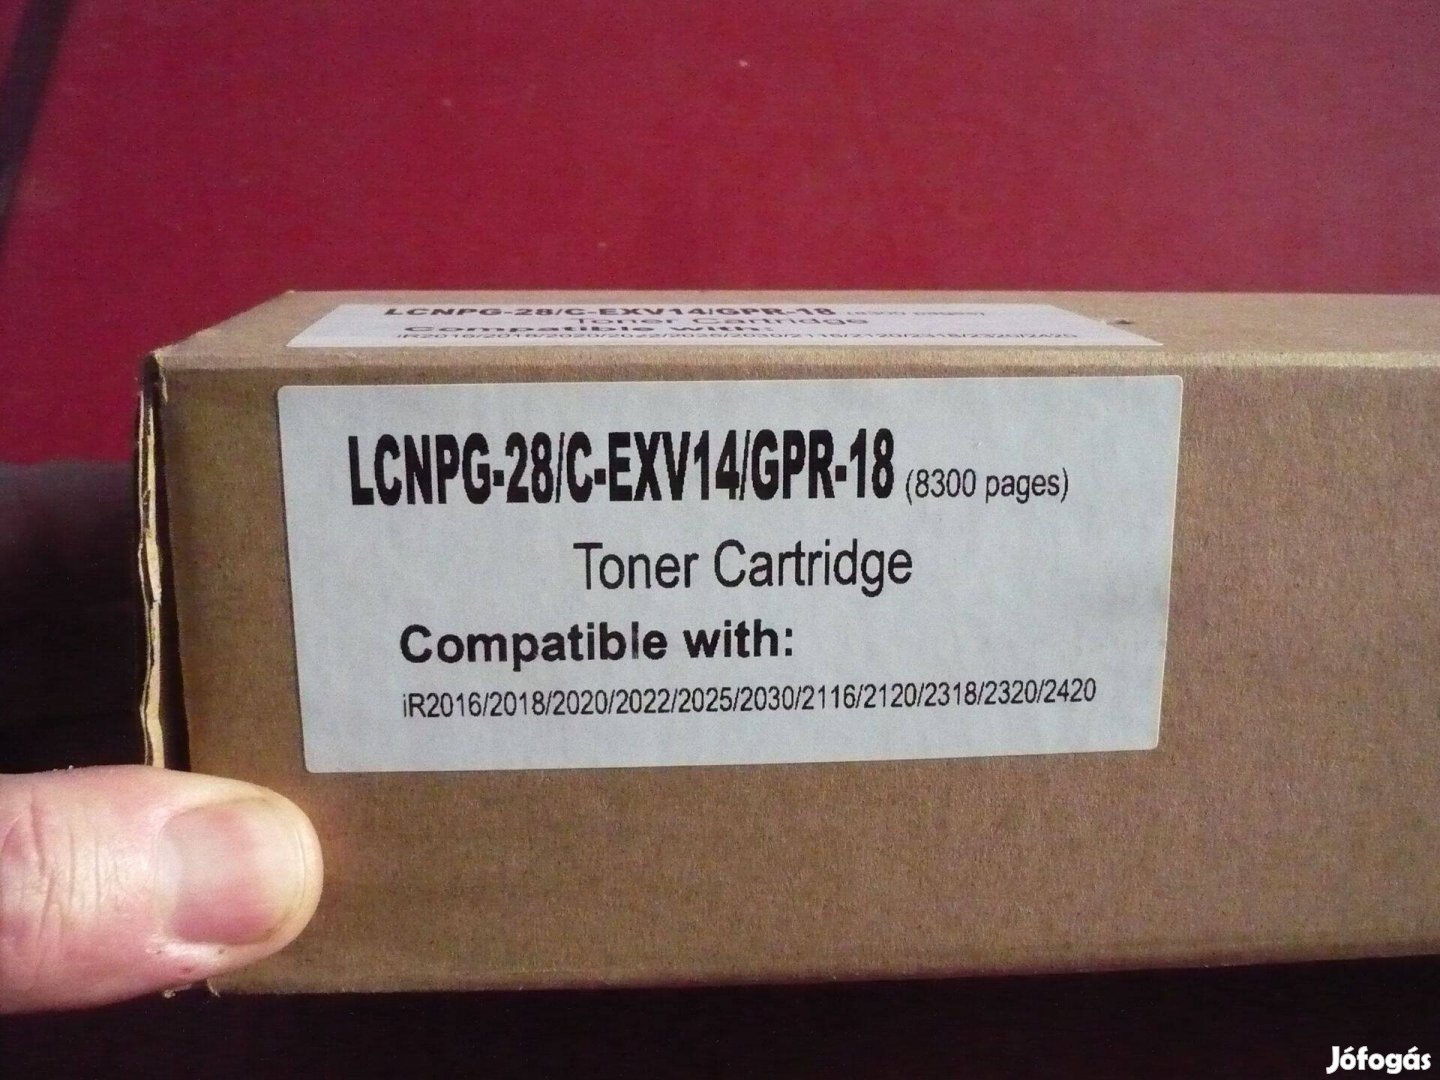 Lcnpg-28/C-Exv14/GPR-18 Toner